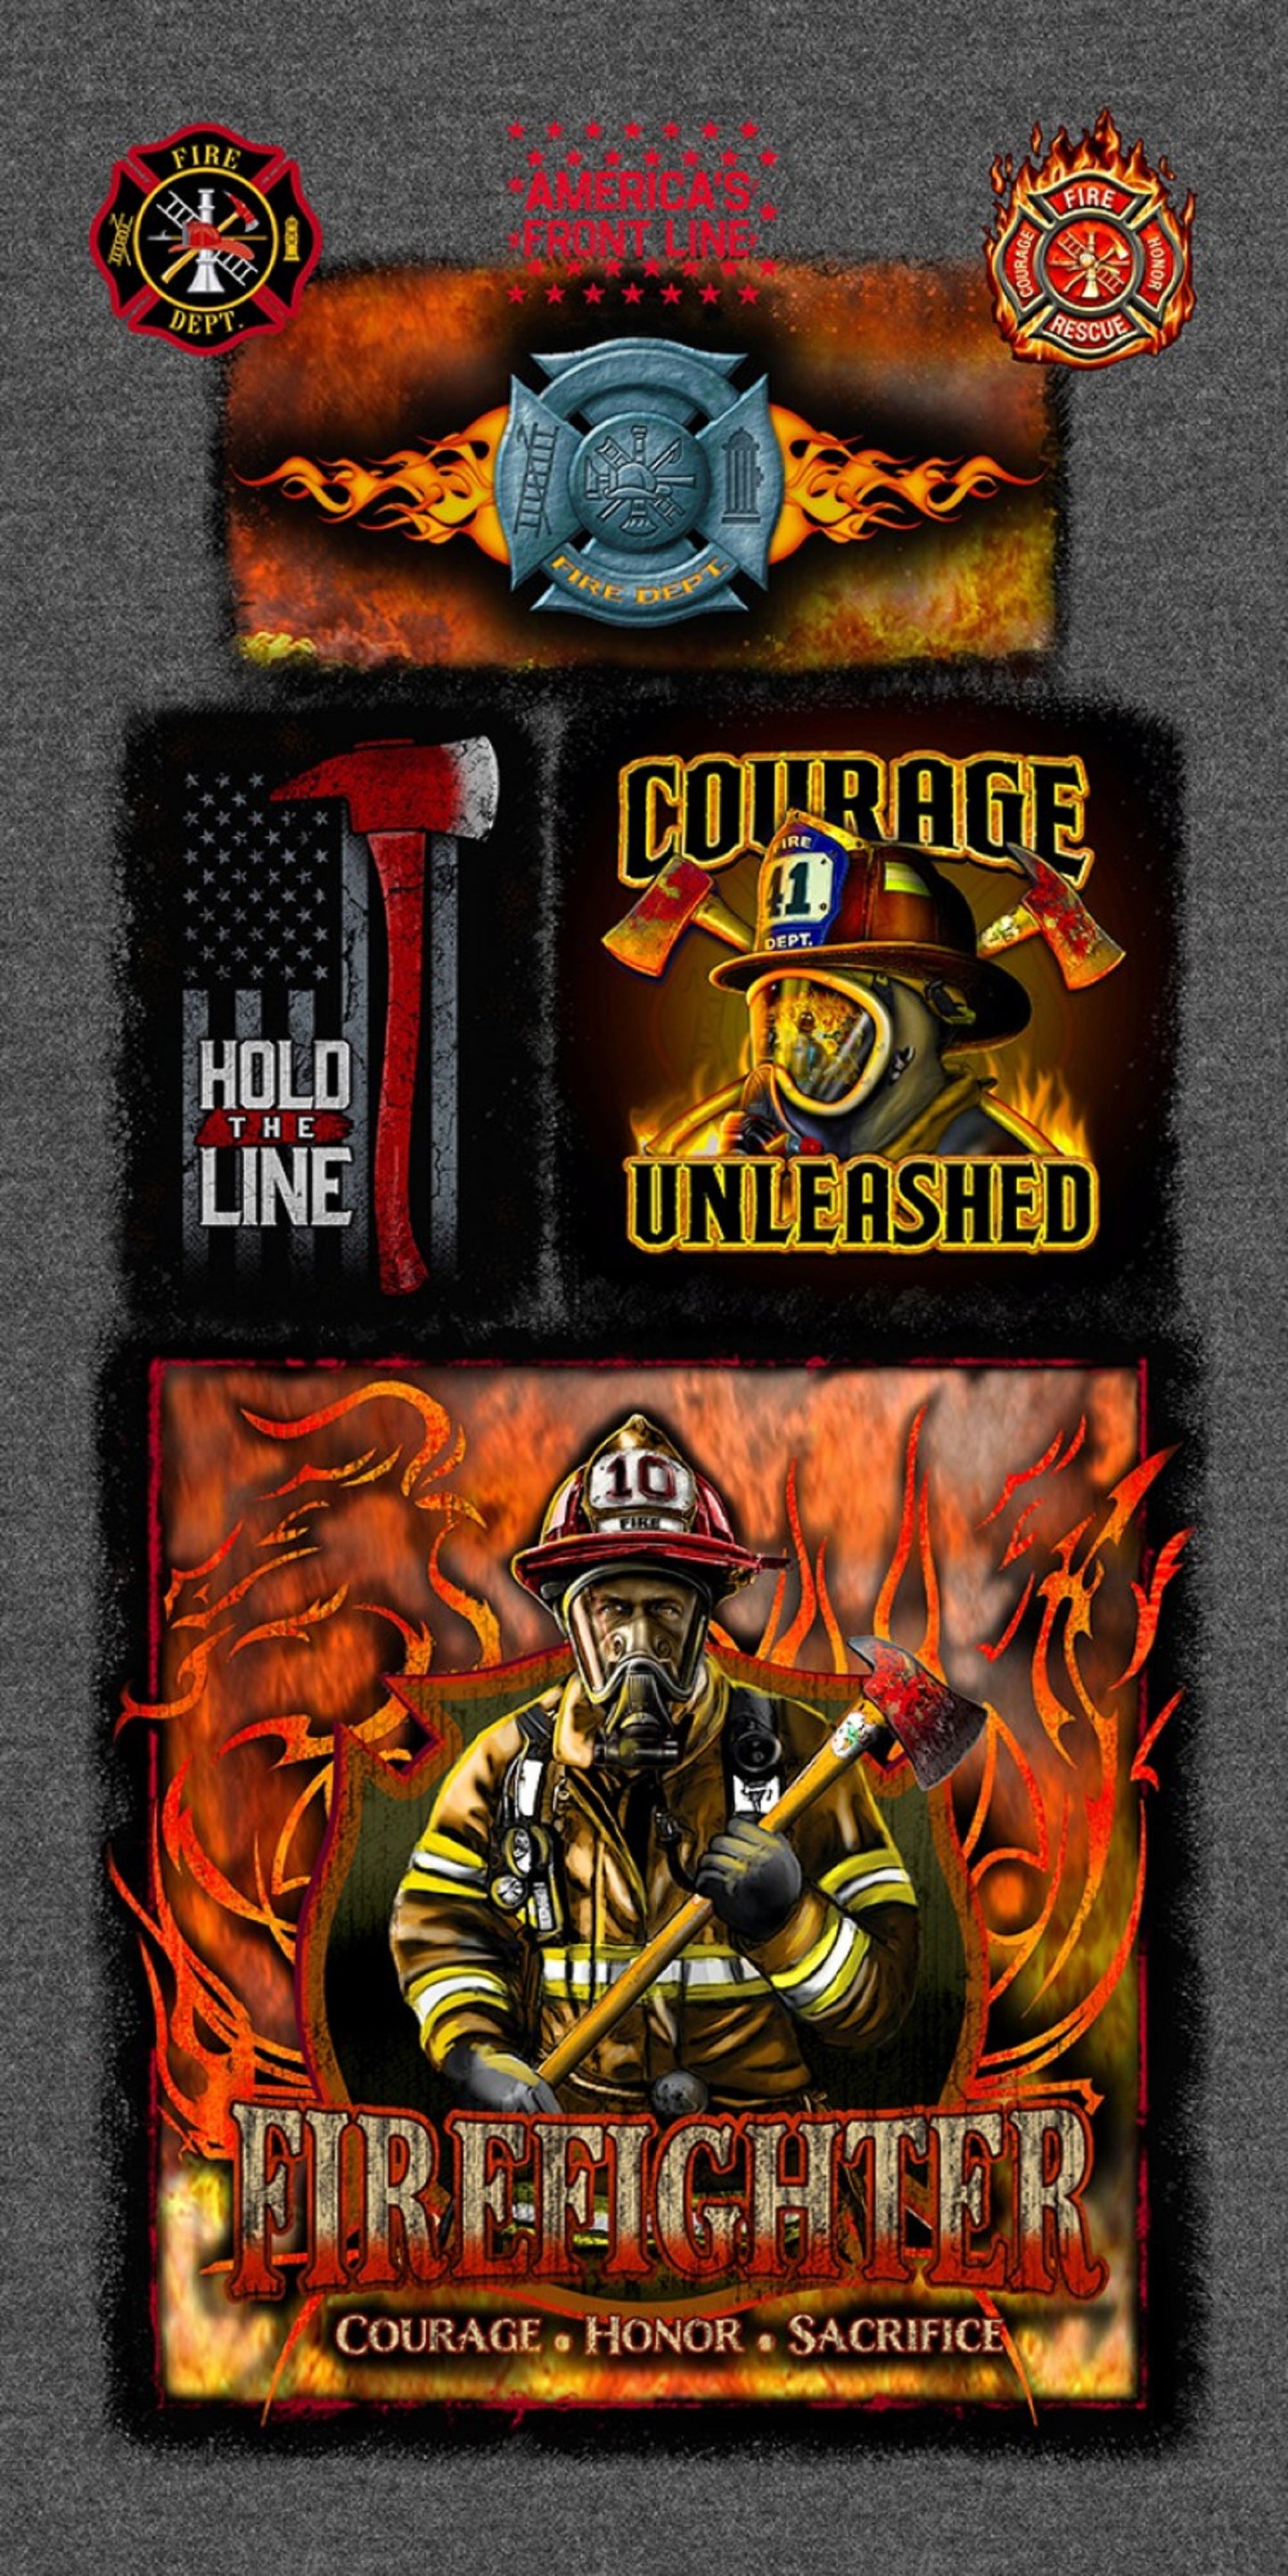 Firefighter Panel-Sykel Enterprises-Courage-Honor-Sacrifuce